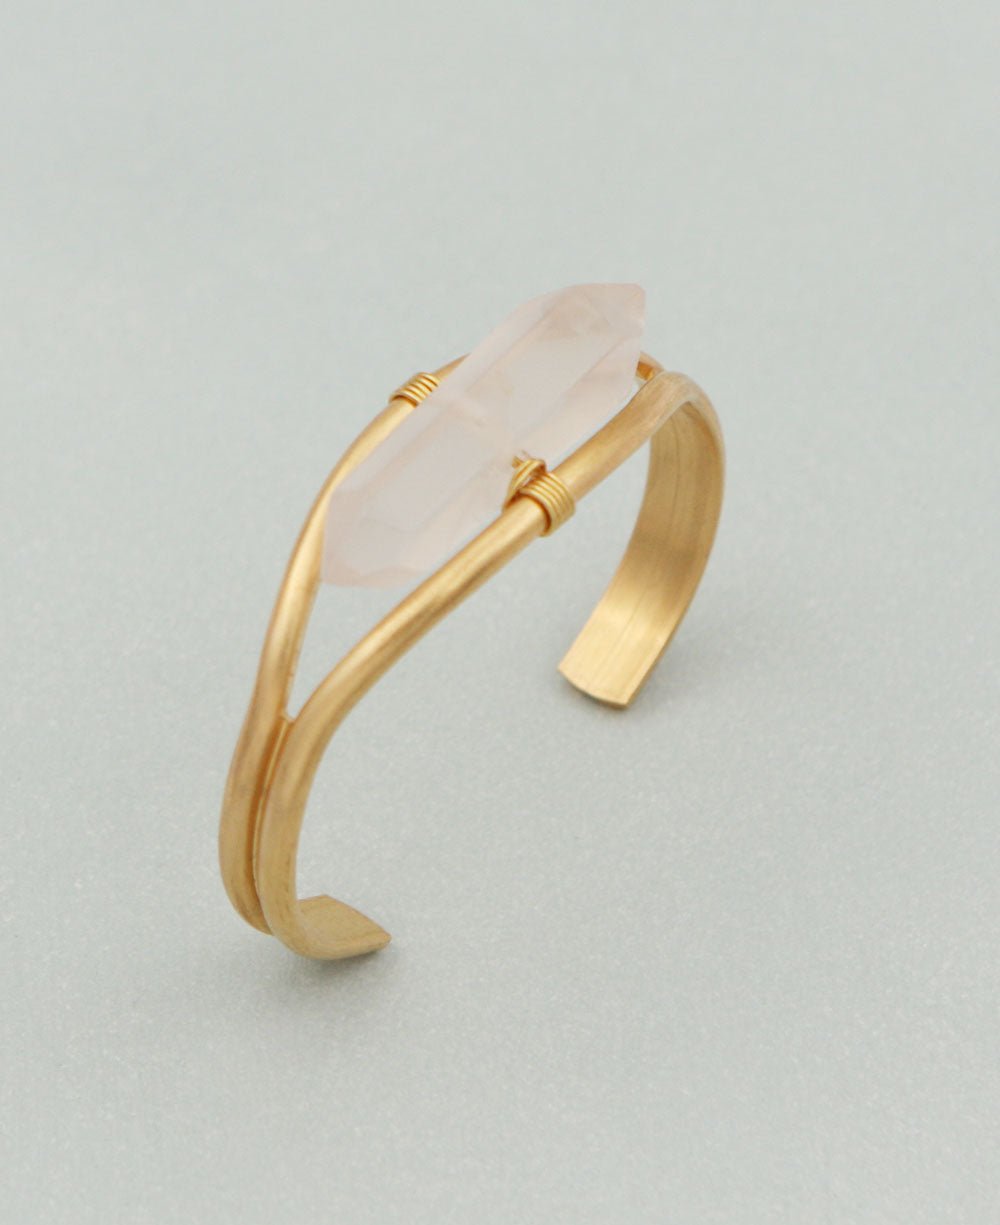 Brass Cuff Bracelet with Rose Quartz Gemstone, USA -